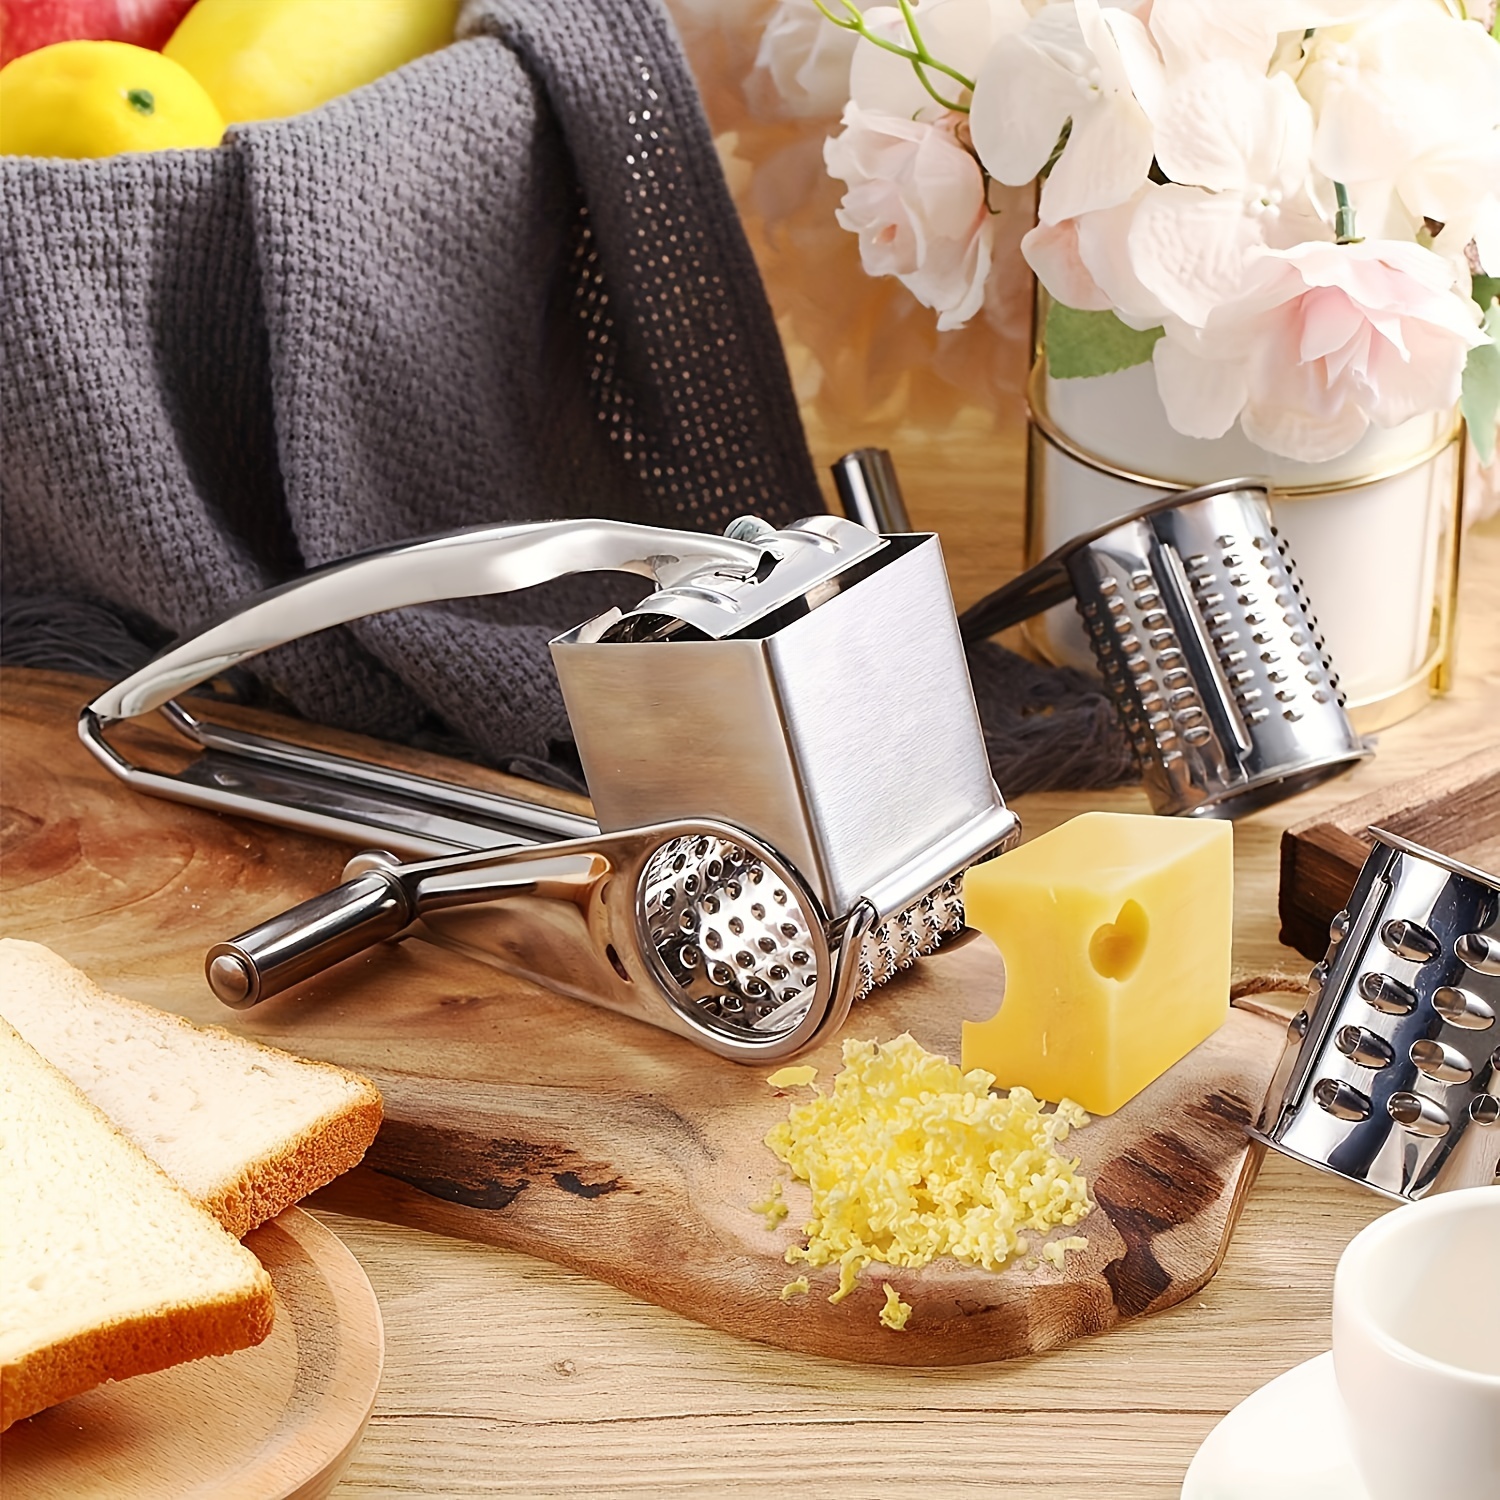 Stainless Steel Kitchen Accessories, kitchen gadgets, cheese grater, Kitchen  tools accessories